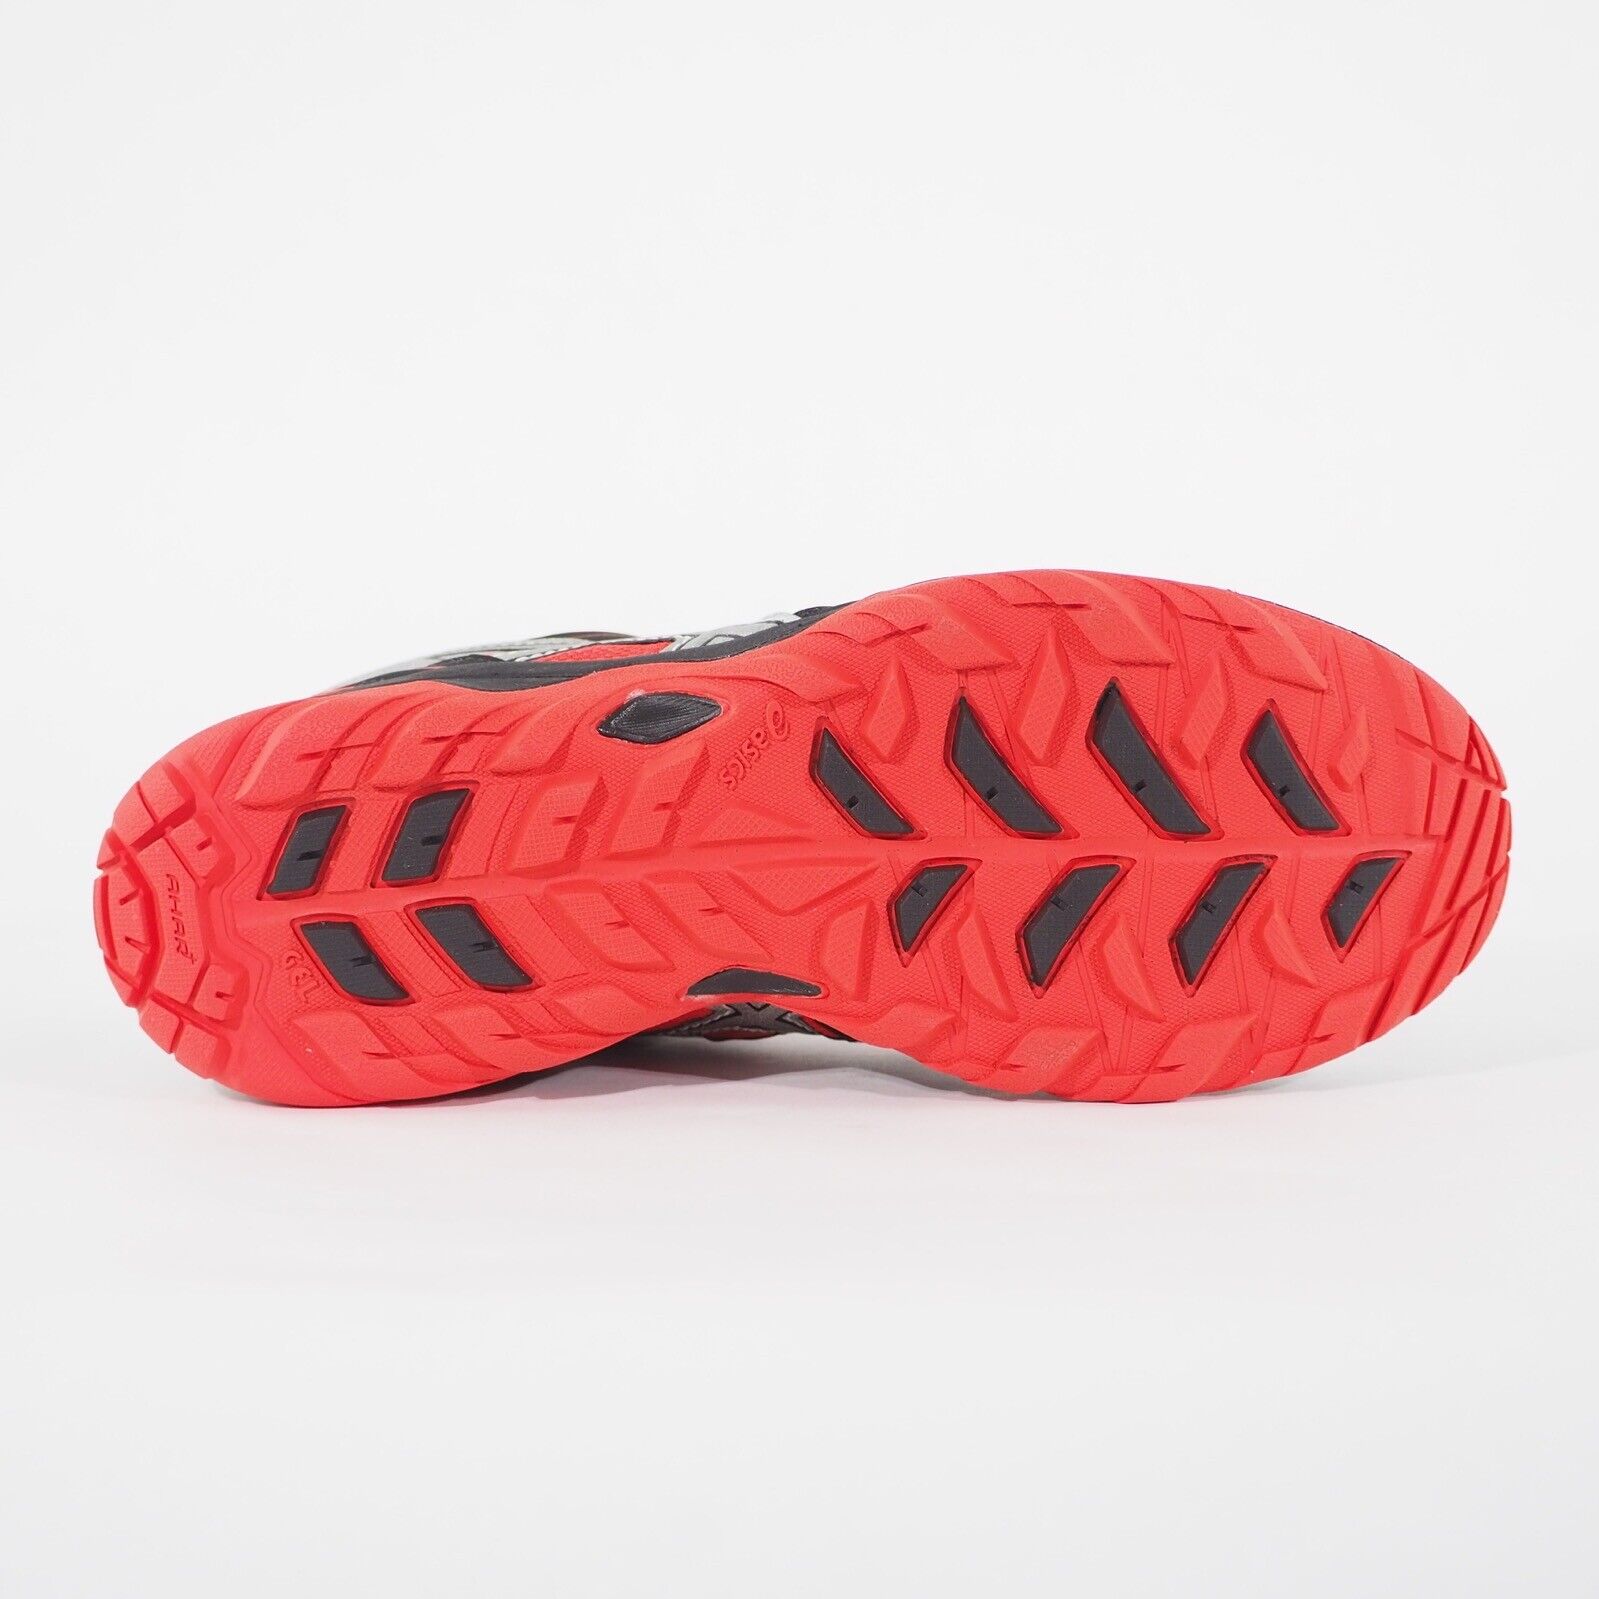 Juniors Asics Gel FujiViper G-TX Q404N Red Black Lace Up Walking Running Shoes